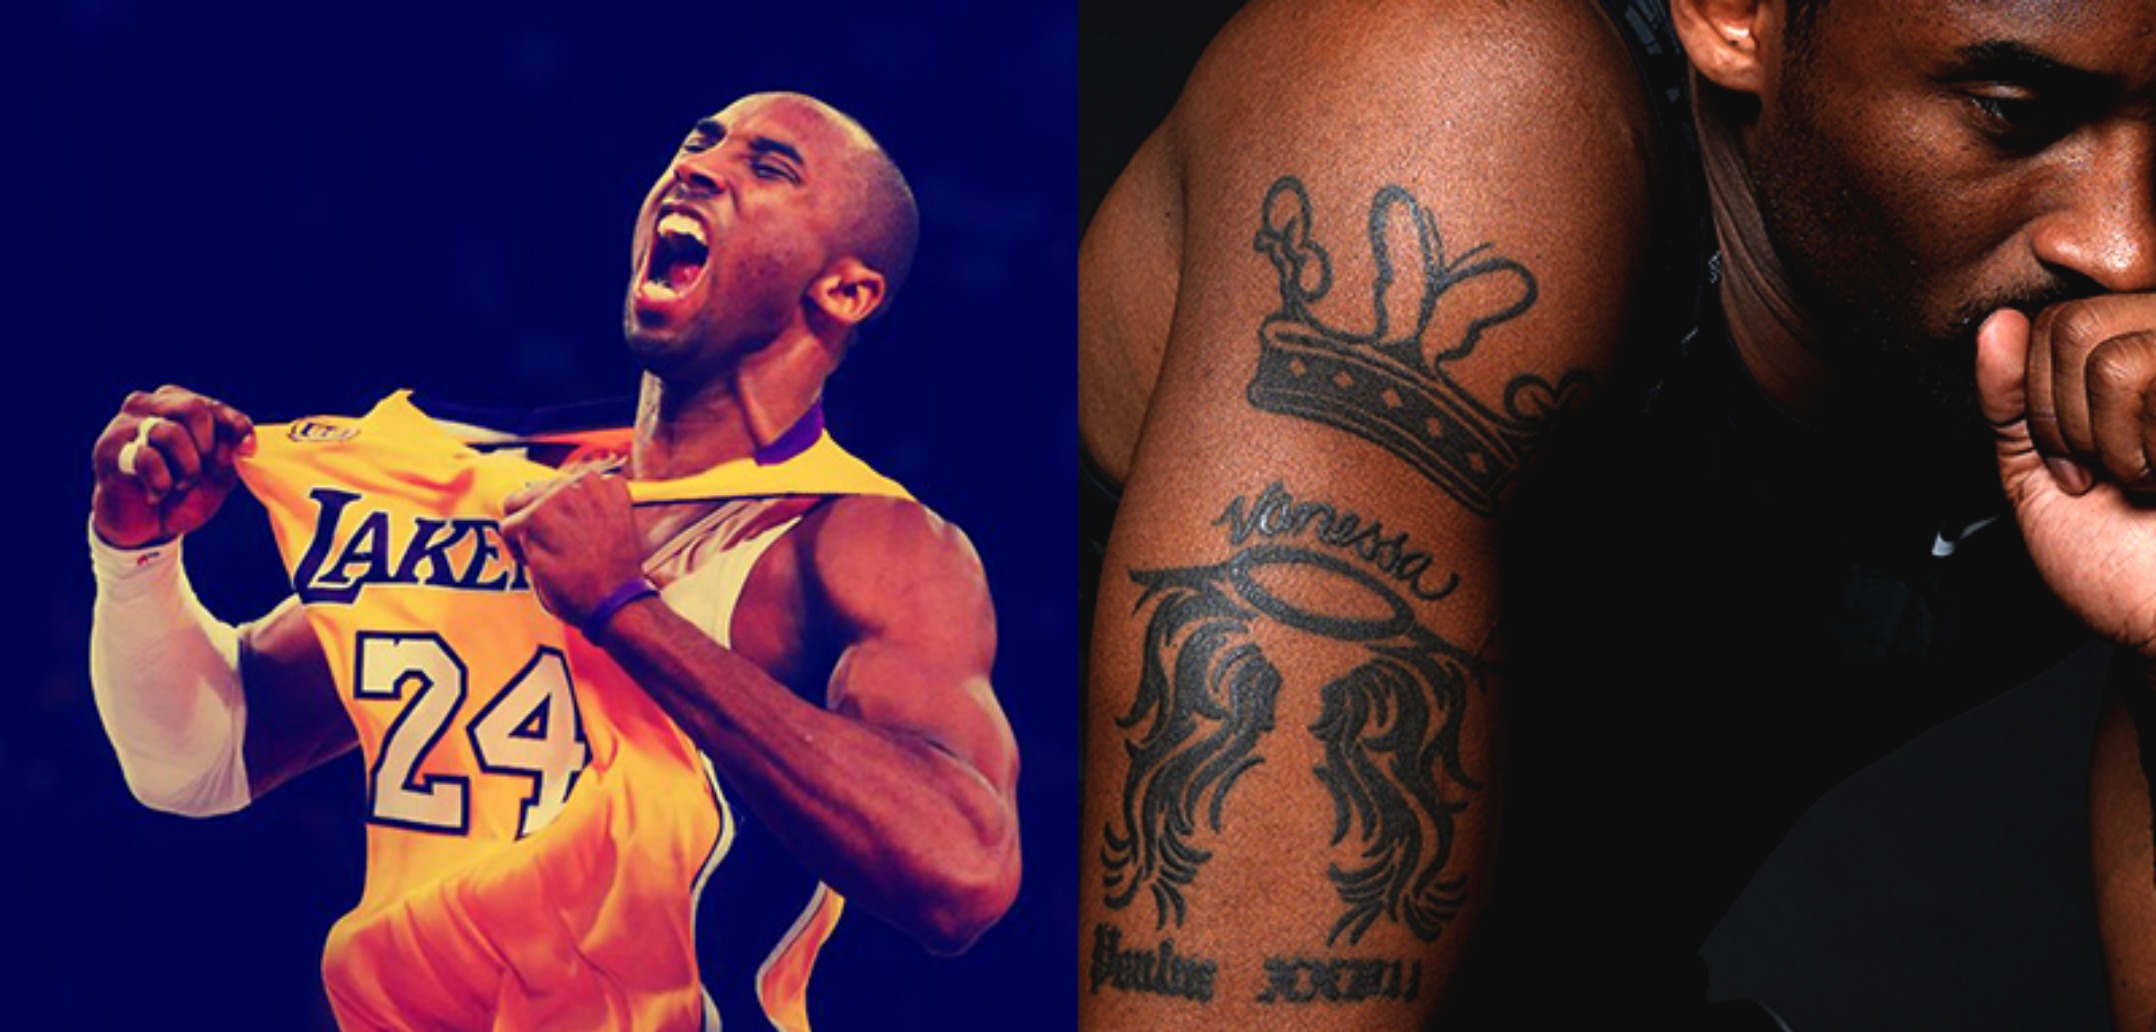 kobe bryant tattoo  Bryant lakers, Kobe bryant, Kobe bryant tattoos